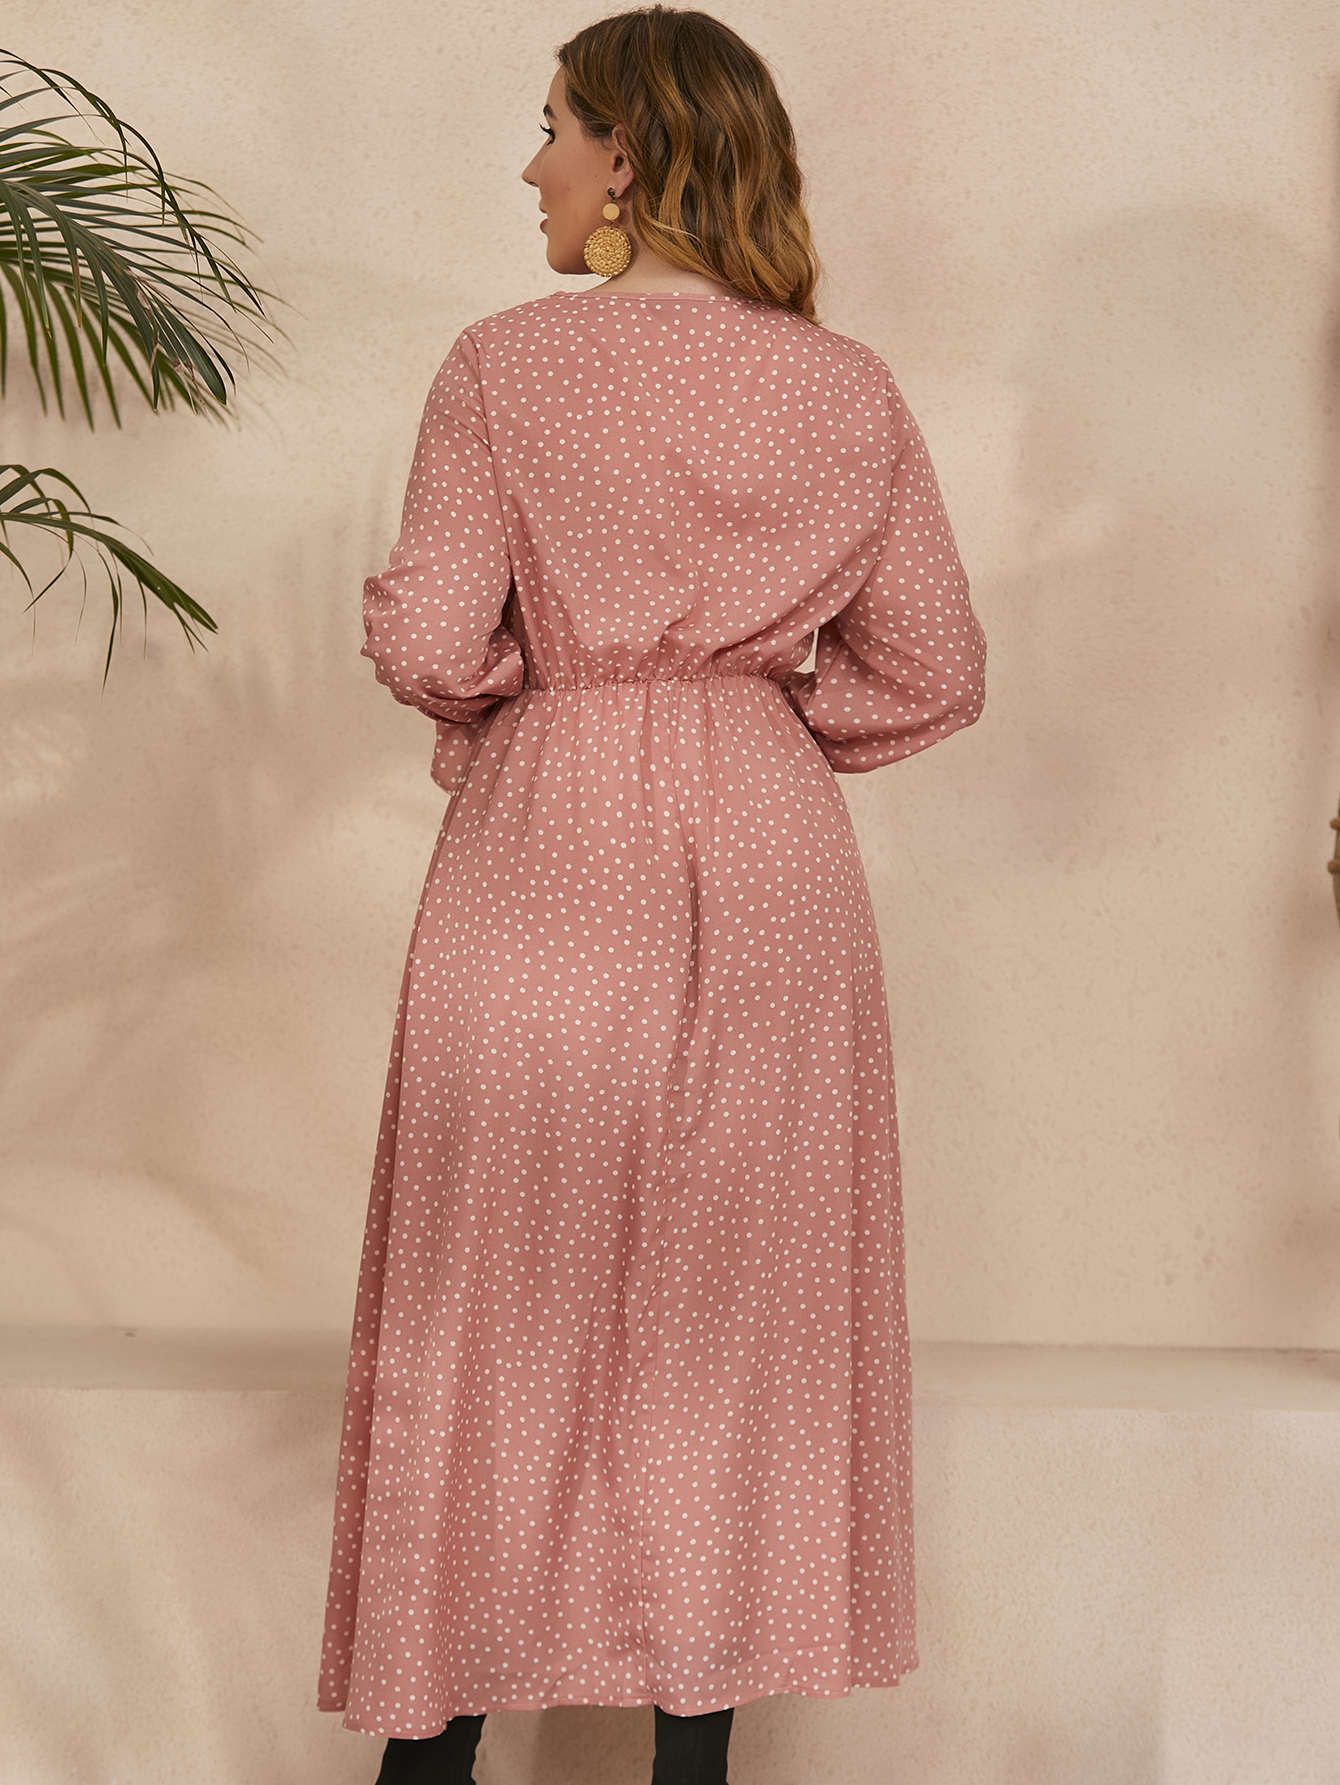 Style plus Size Women Dress 2022 Polka-Dot Loose-Fitting Plump Girls Long Sleeve Dress